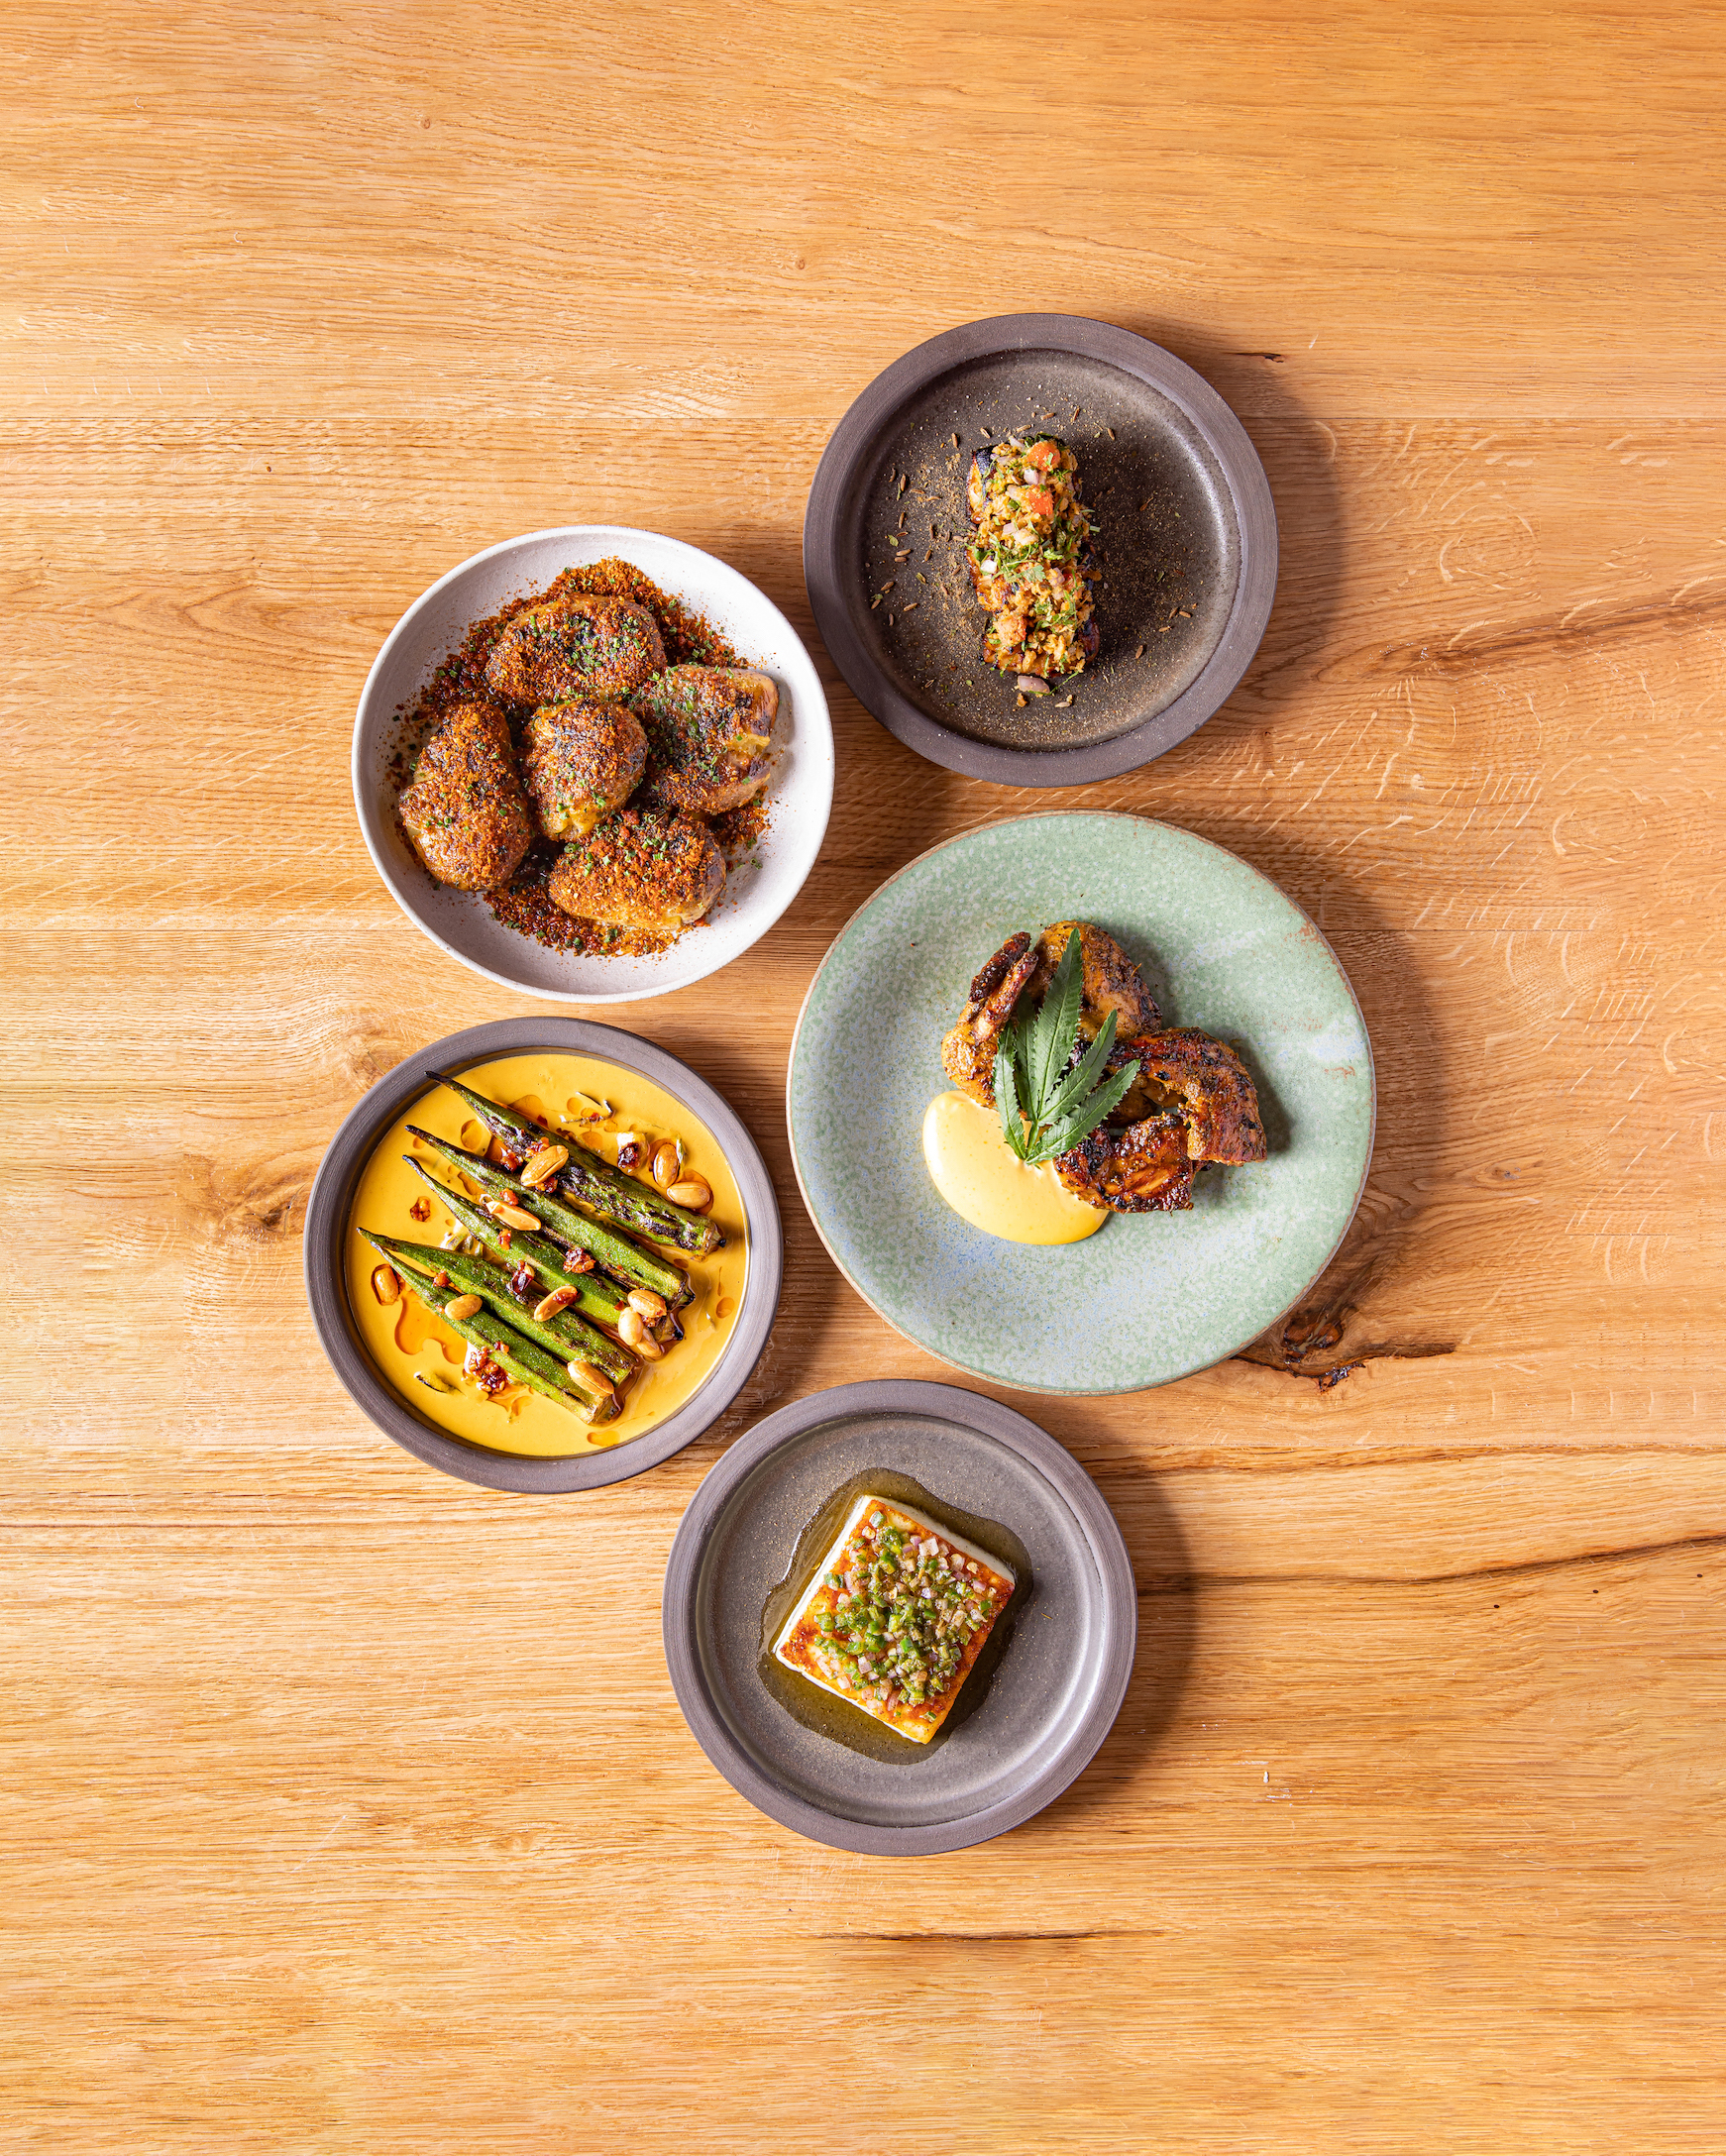 imagen 5 de Bibi, el primer restaurante indio que querrás probar en tu próxima visita a Londres.